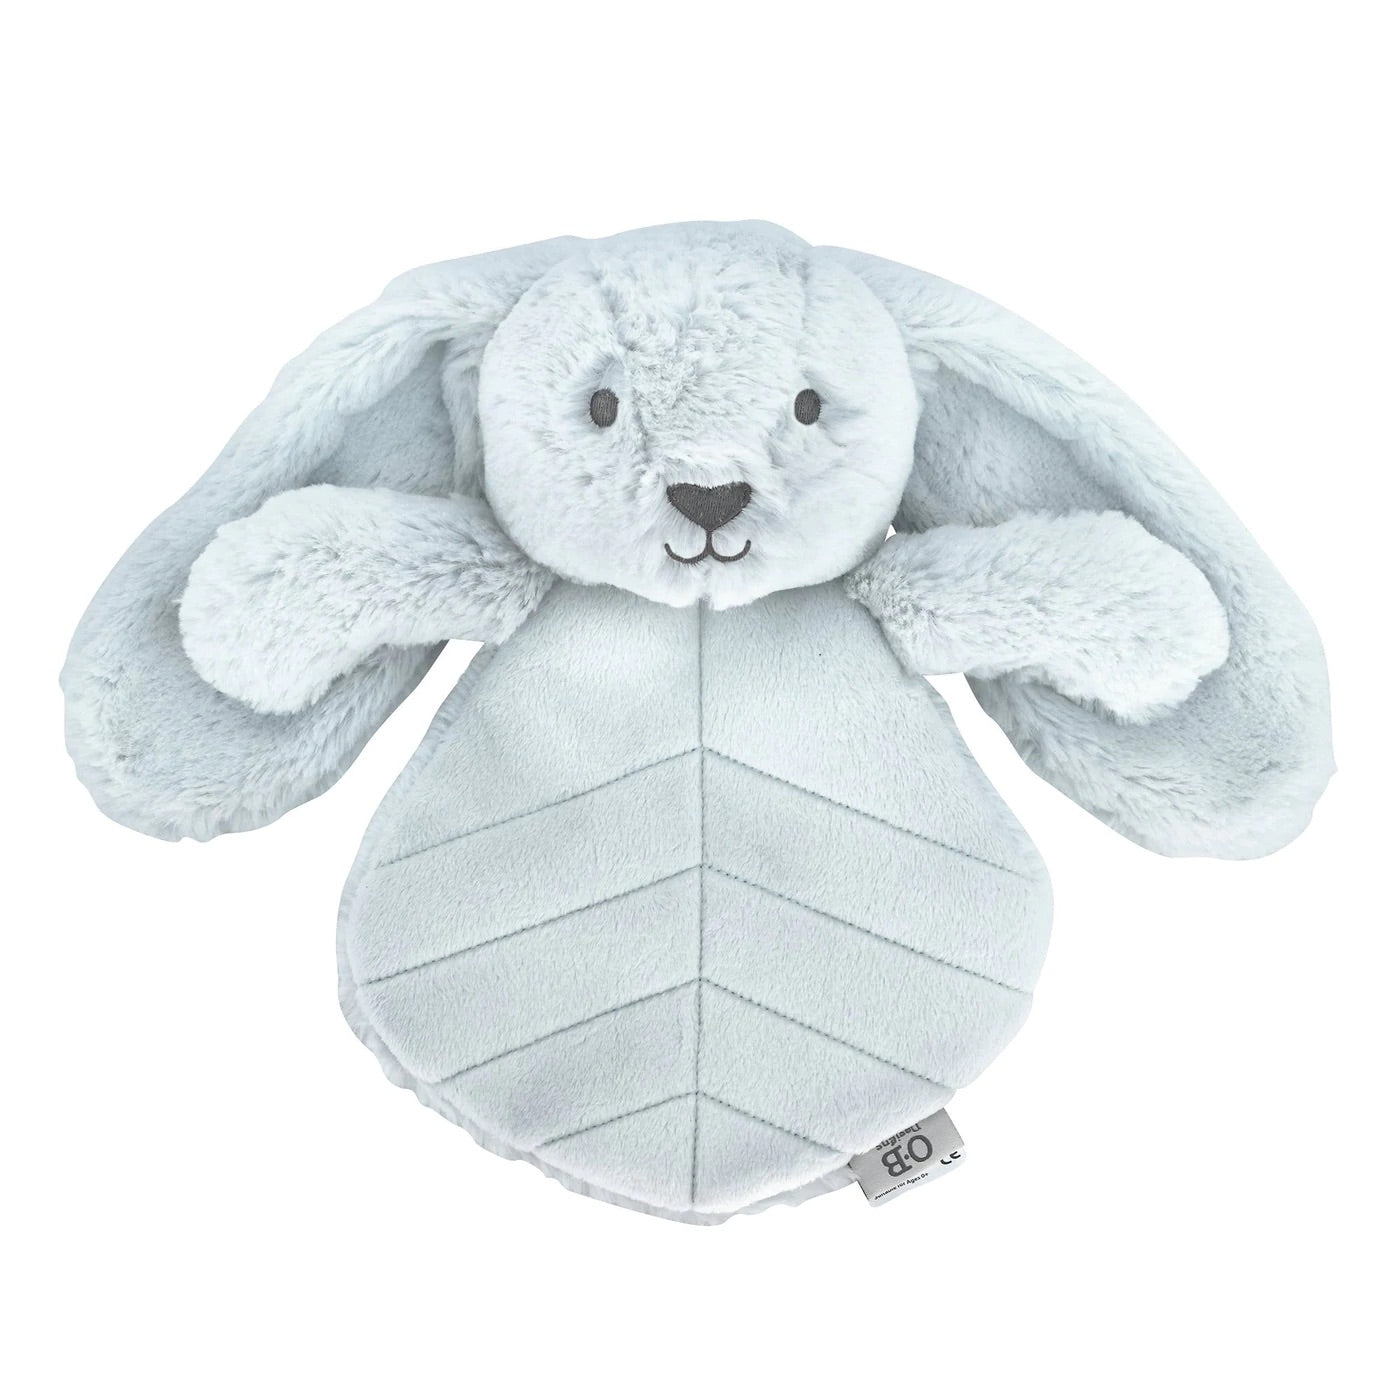 O.B Designs Baxter Bunny Comforter